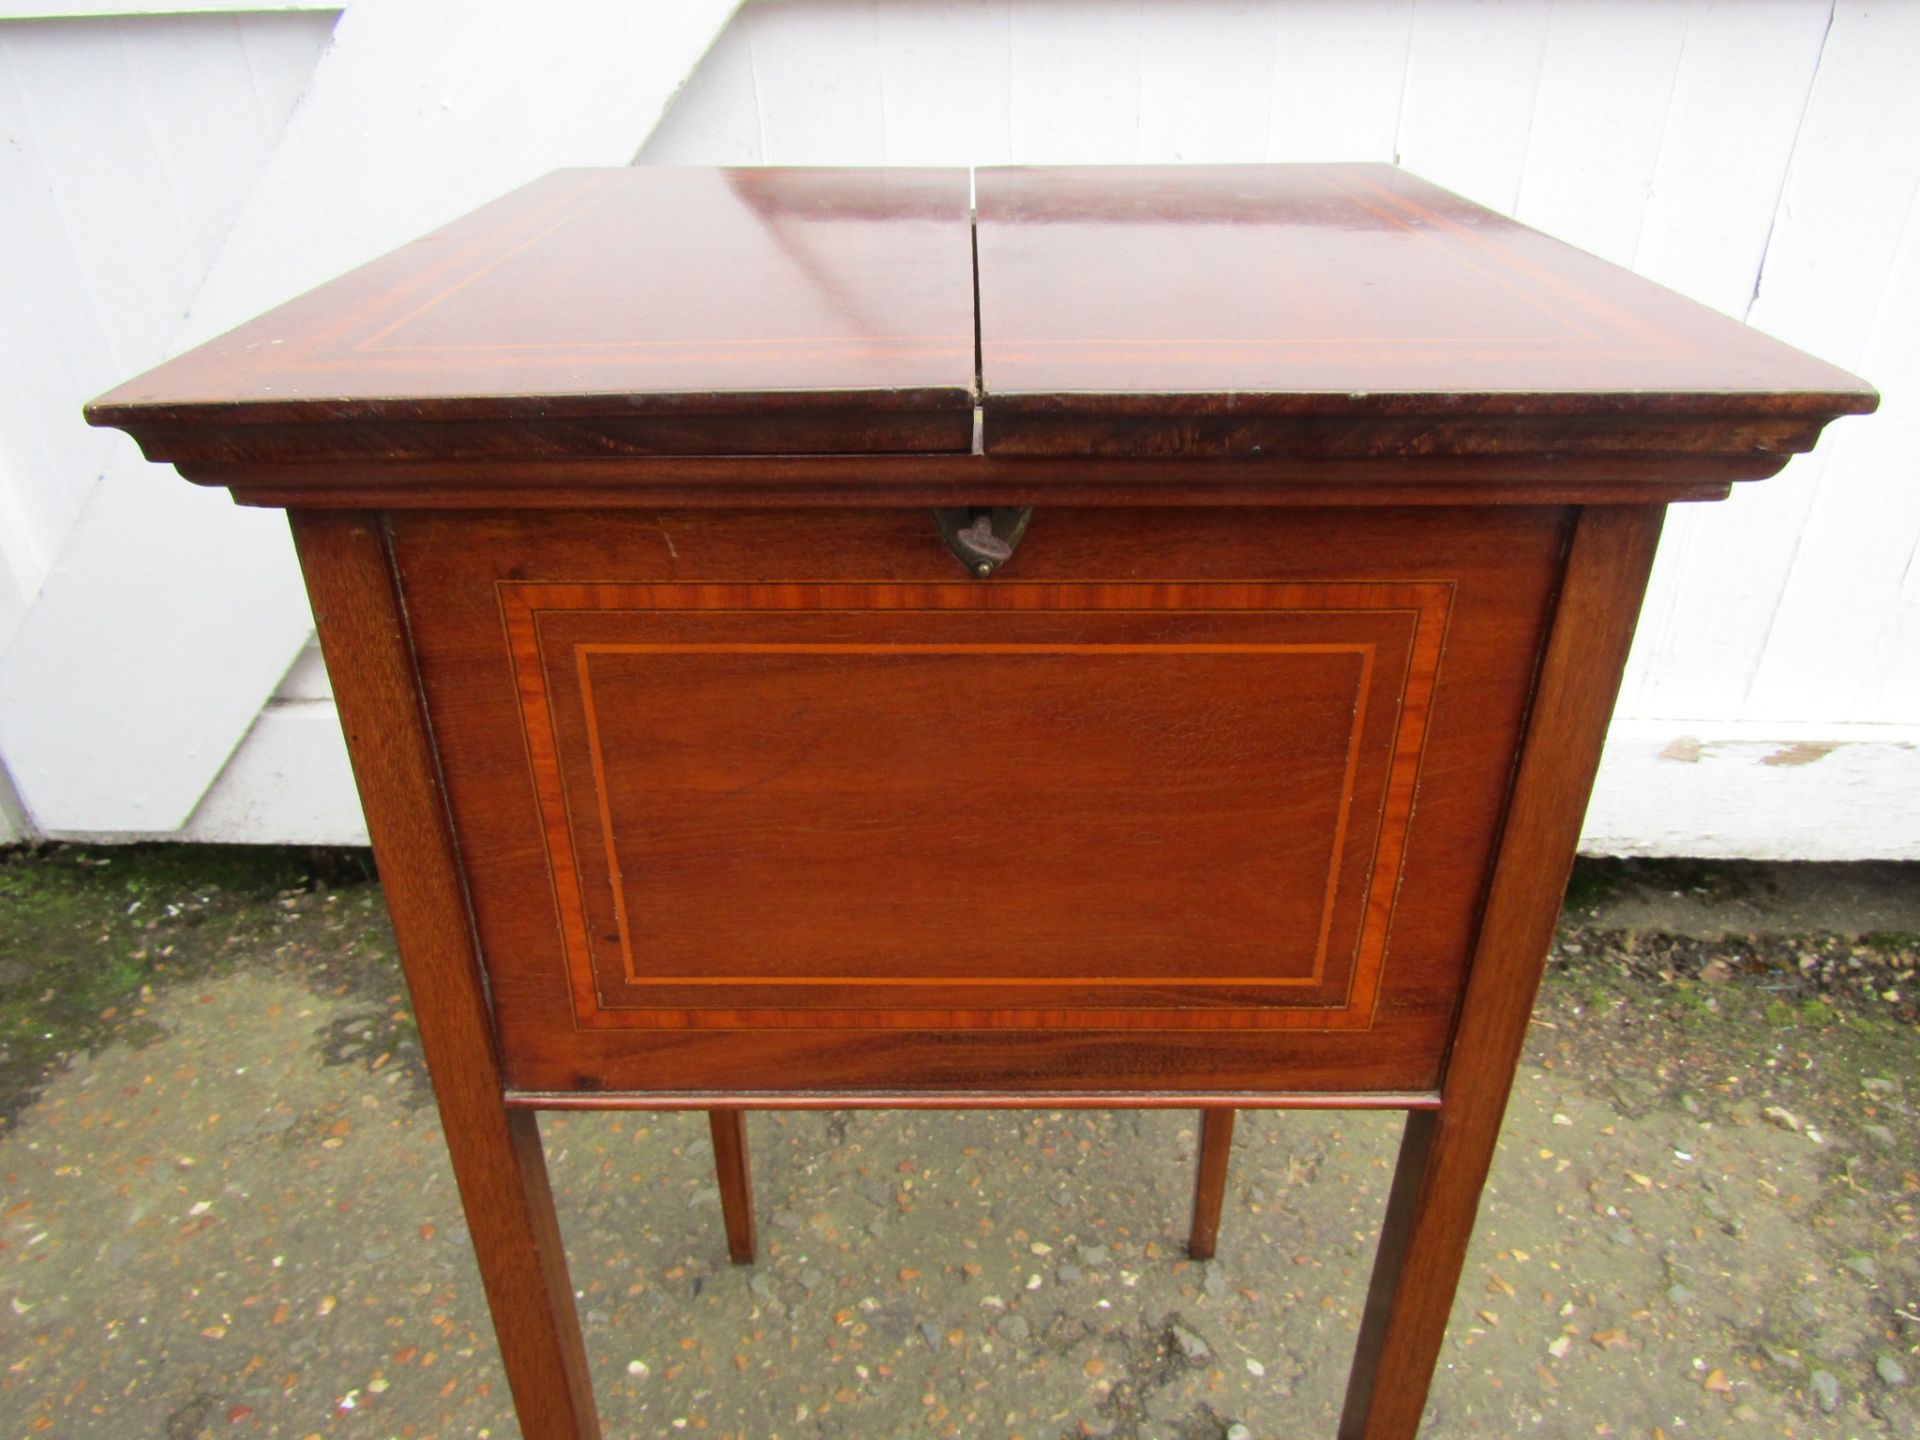 Mahogany veneered inlaid sewing box on castors - Image 2 of 4